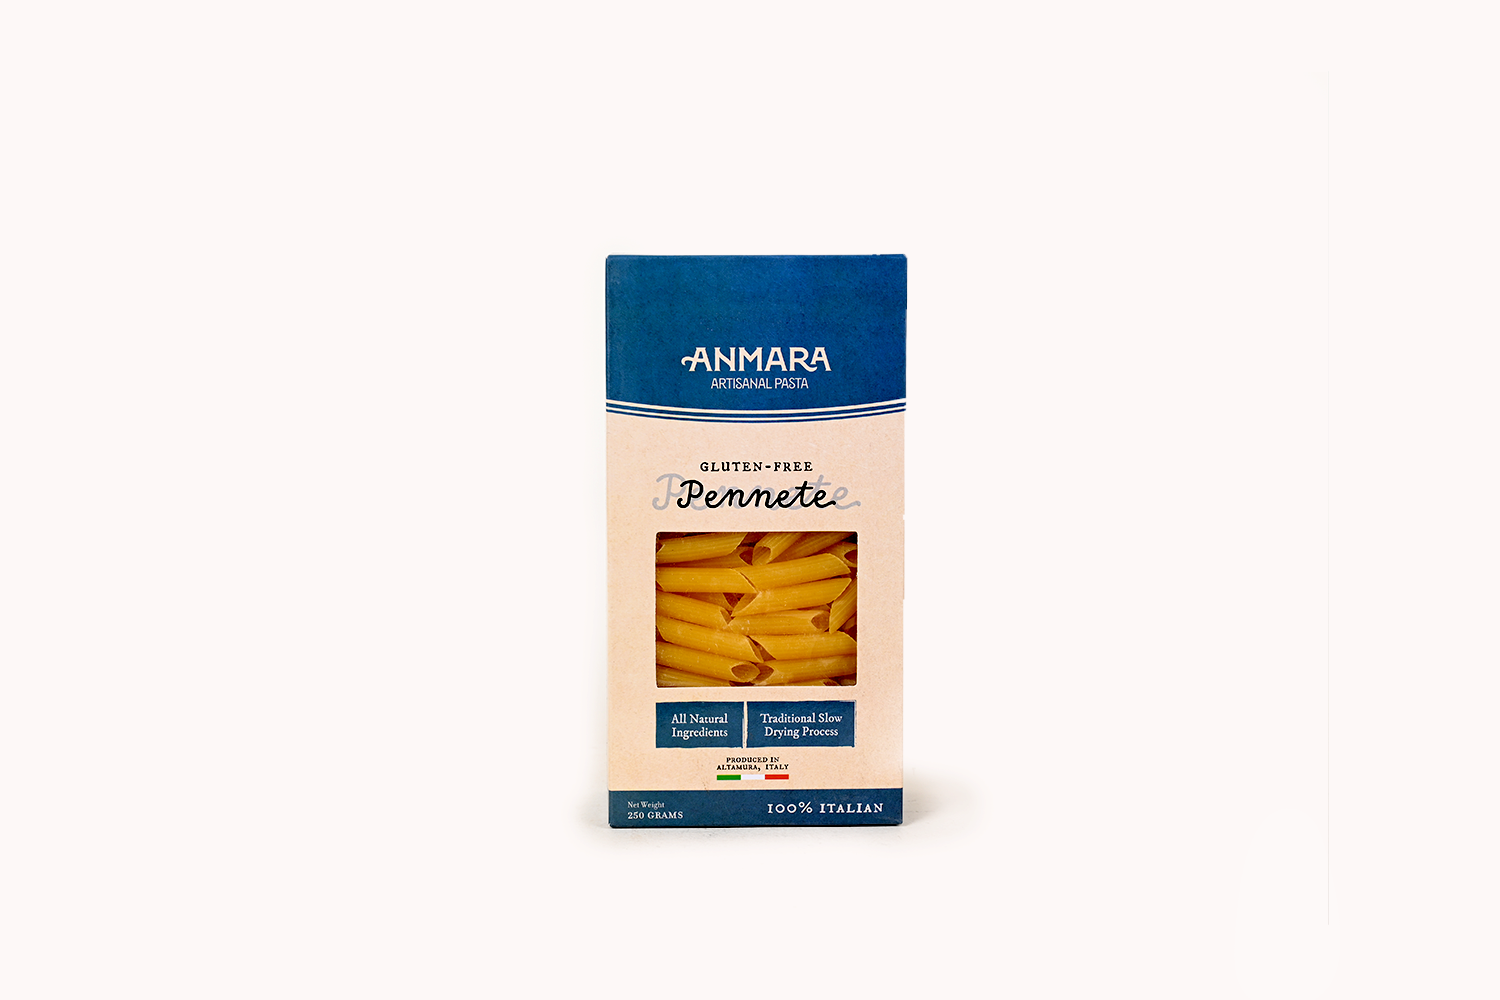 Anmara Gluten-Free Pennete Pasta